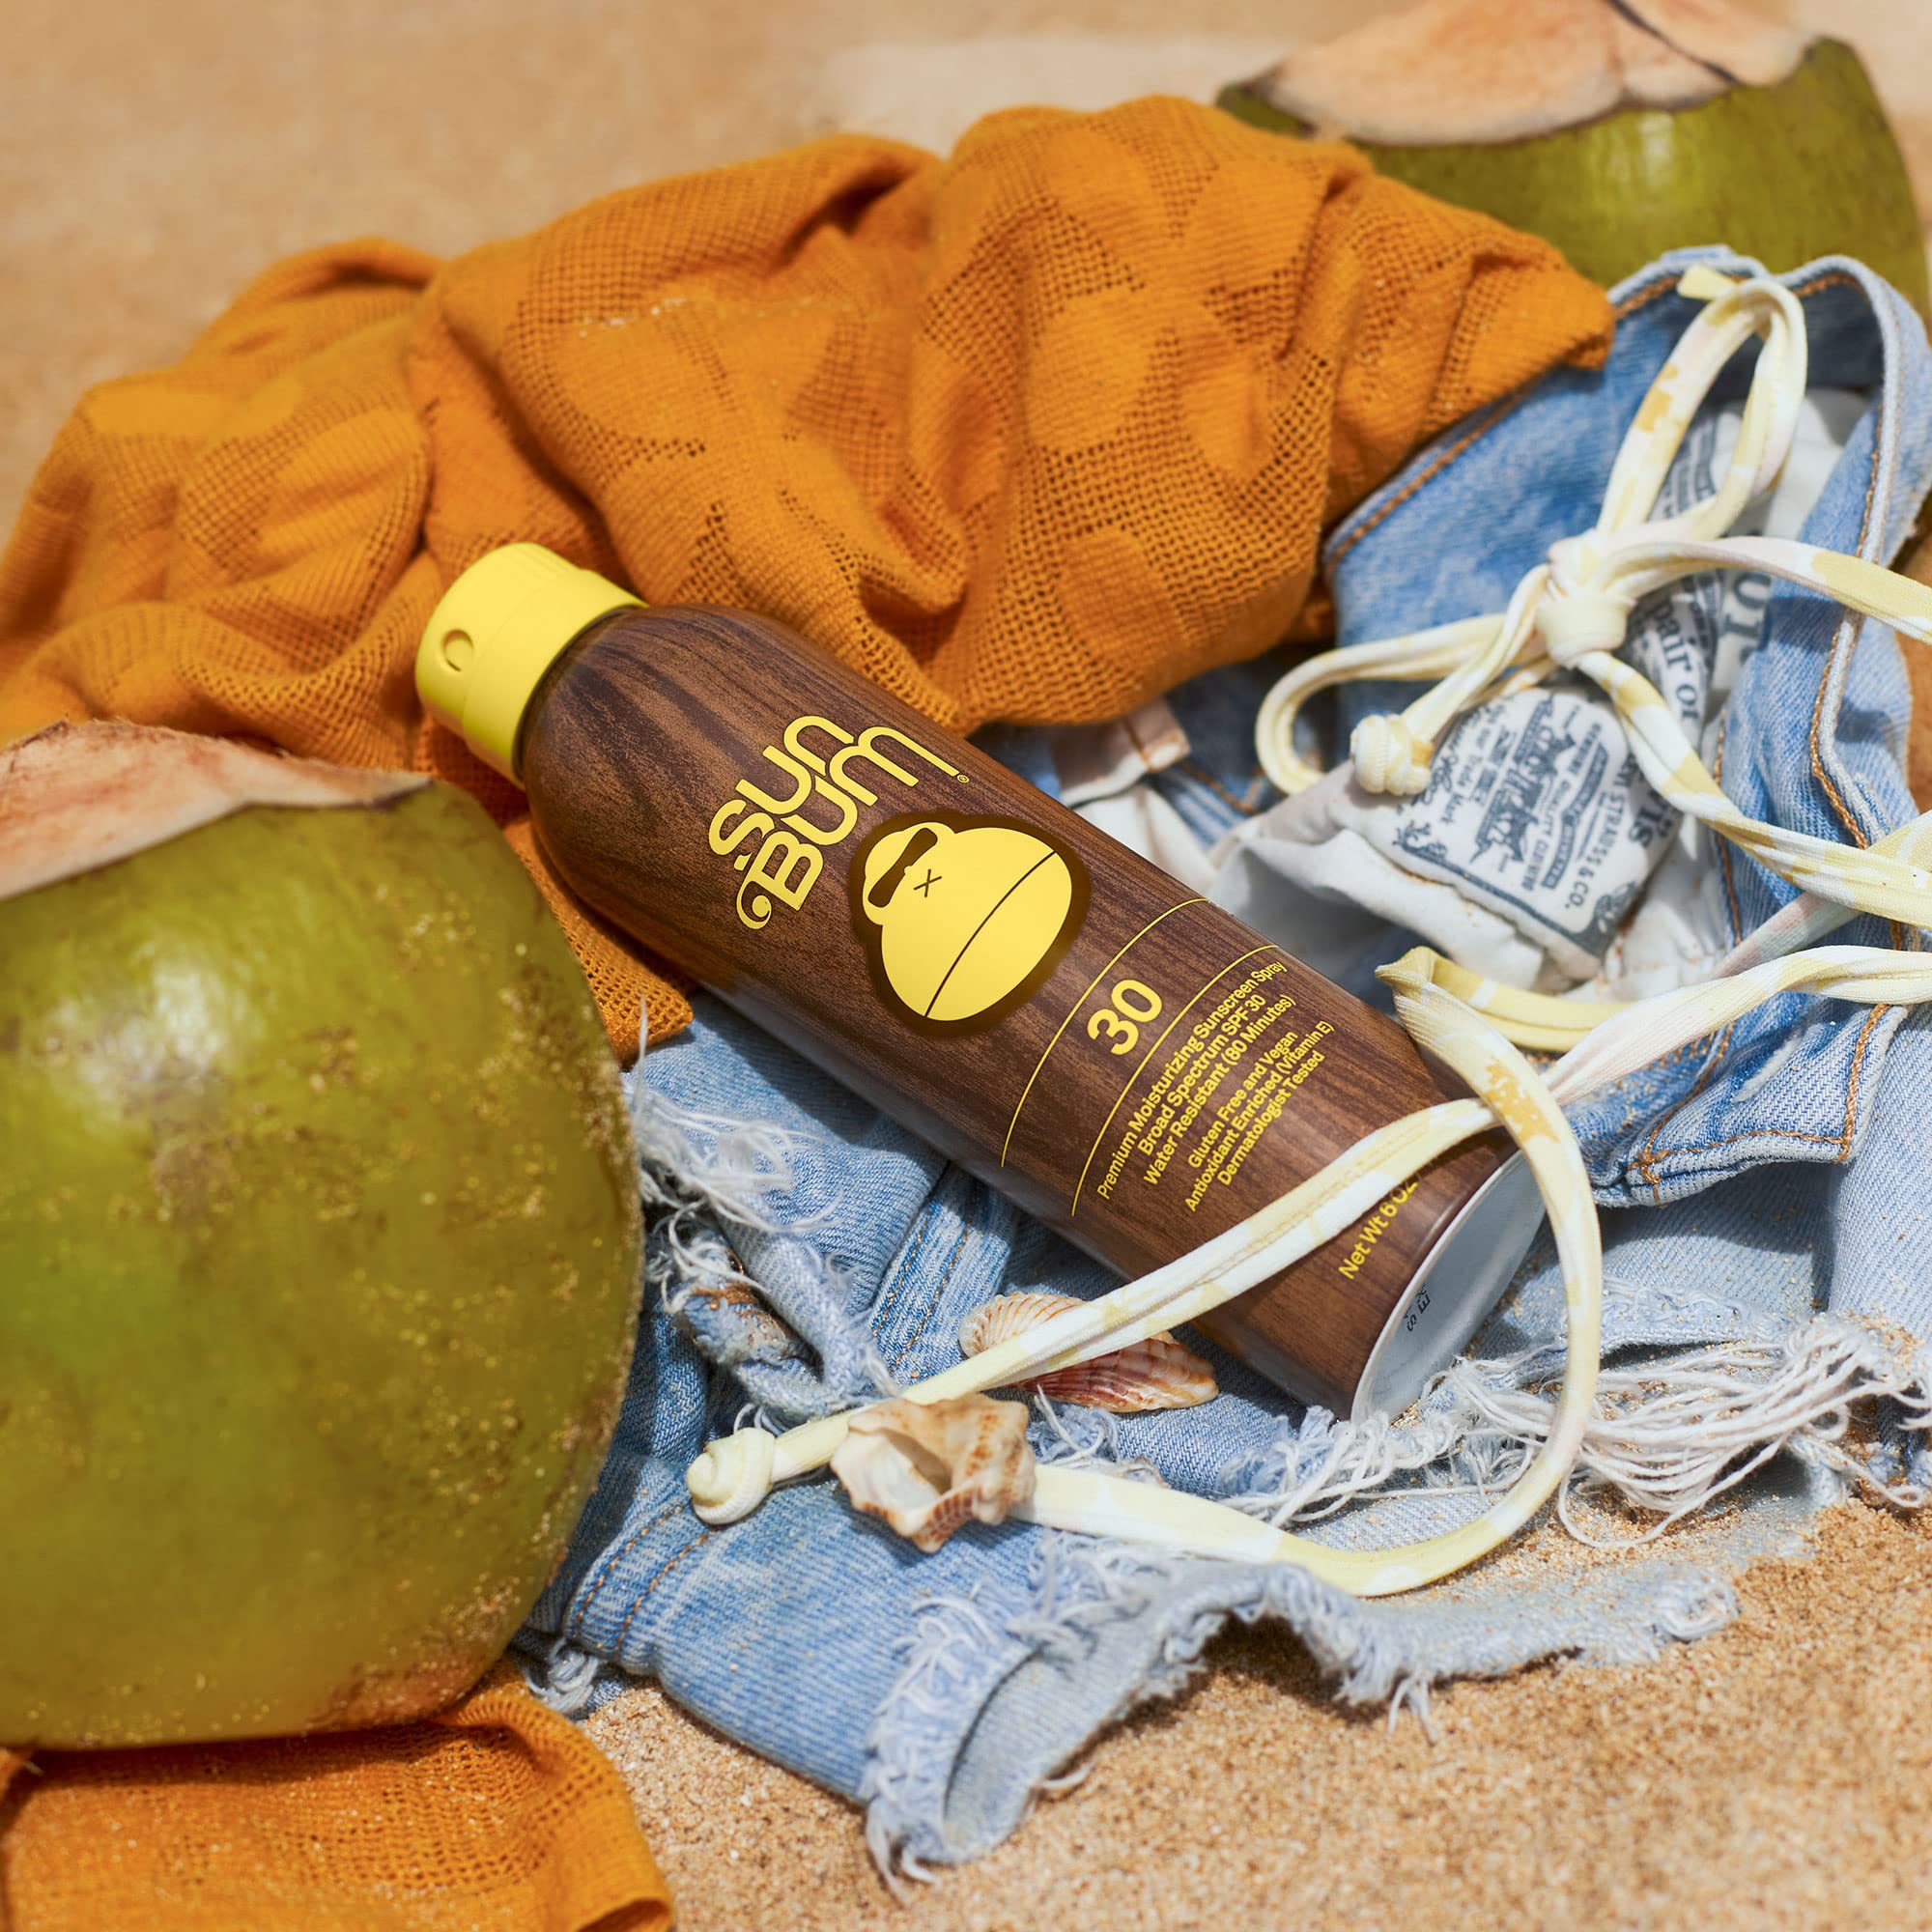 Sun Bum Original SPF 30 Sunscreen Spray |Vegan and Hawaii 104 Reef Act Compliant (Octinoxate & Oxybenzone Free) Broad Spectrum Moisturizing UVA/UVB Sunscreen with Vitamin E | 6 oz